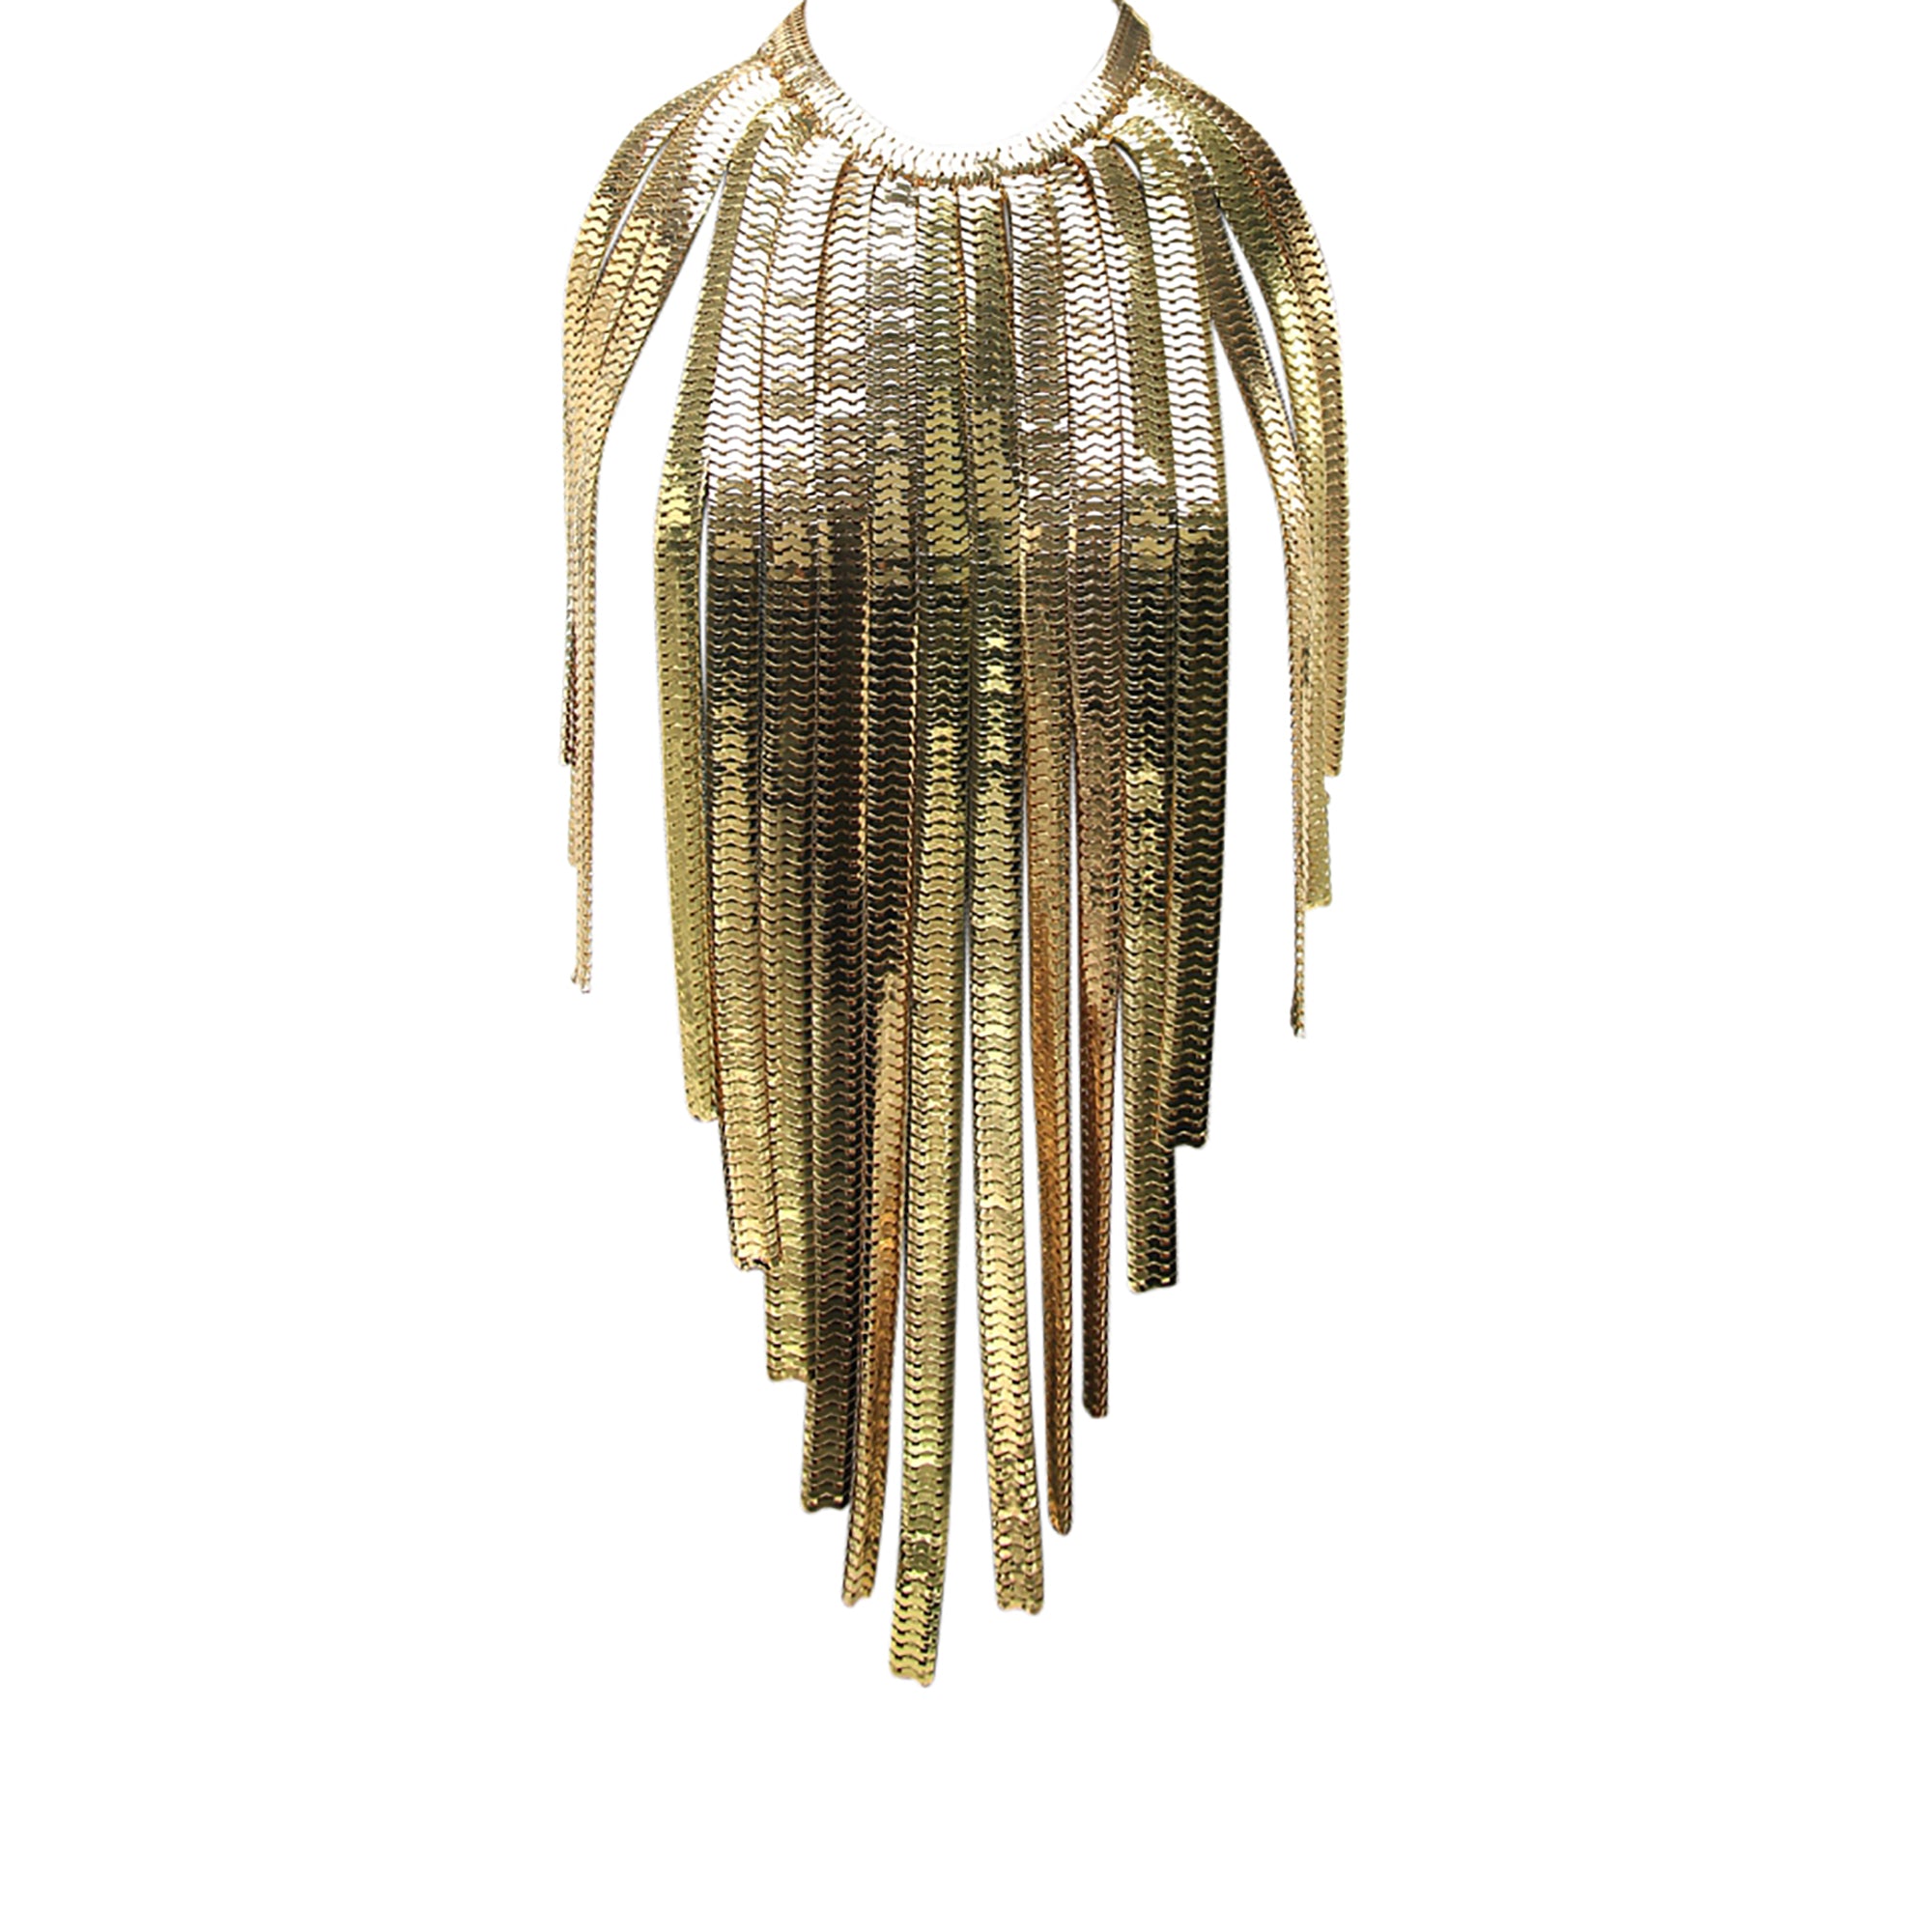 MIzDragonfly Jewelry Parallax Gold Necklace